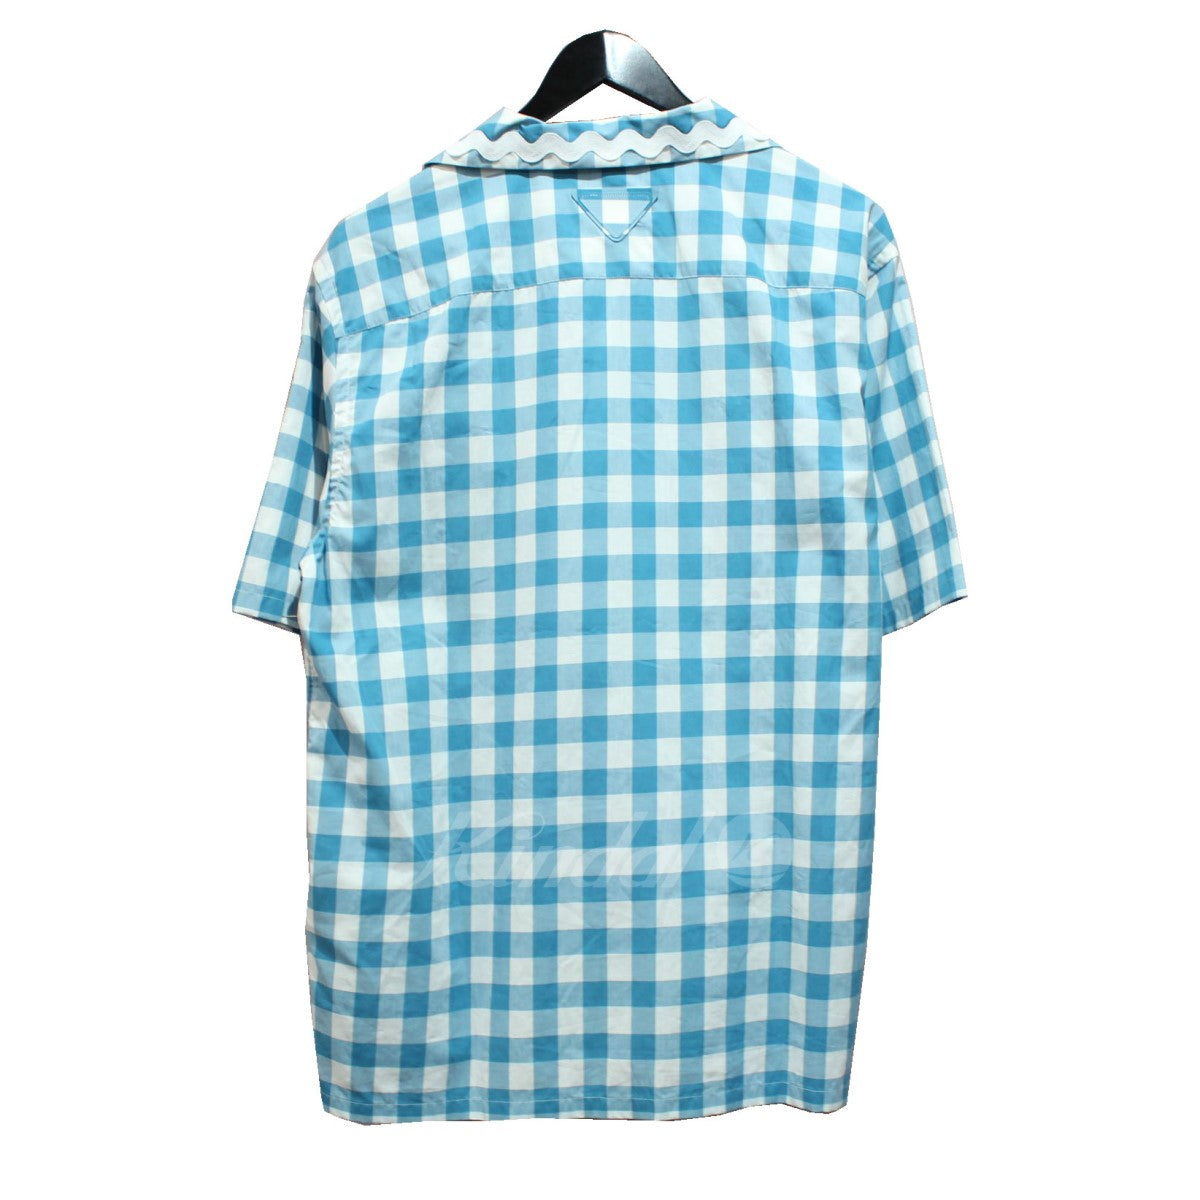 PRADA(プラダ) 23SS ヴィシーマクロブルーギンガムチェックシャツ 半袖シャツ